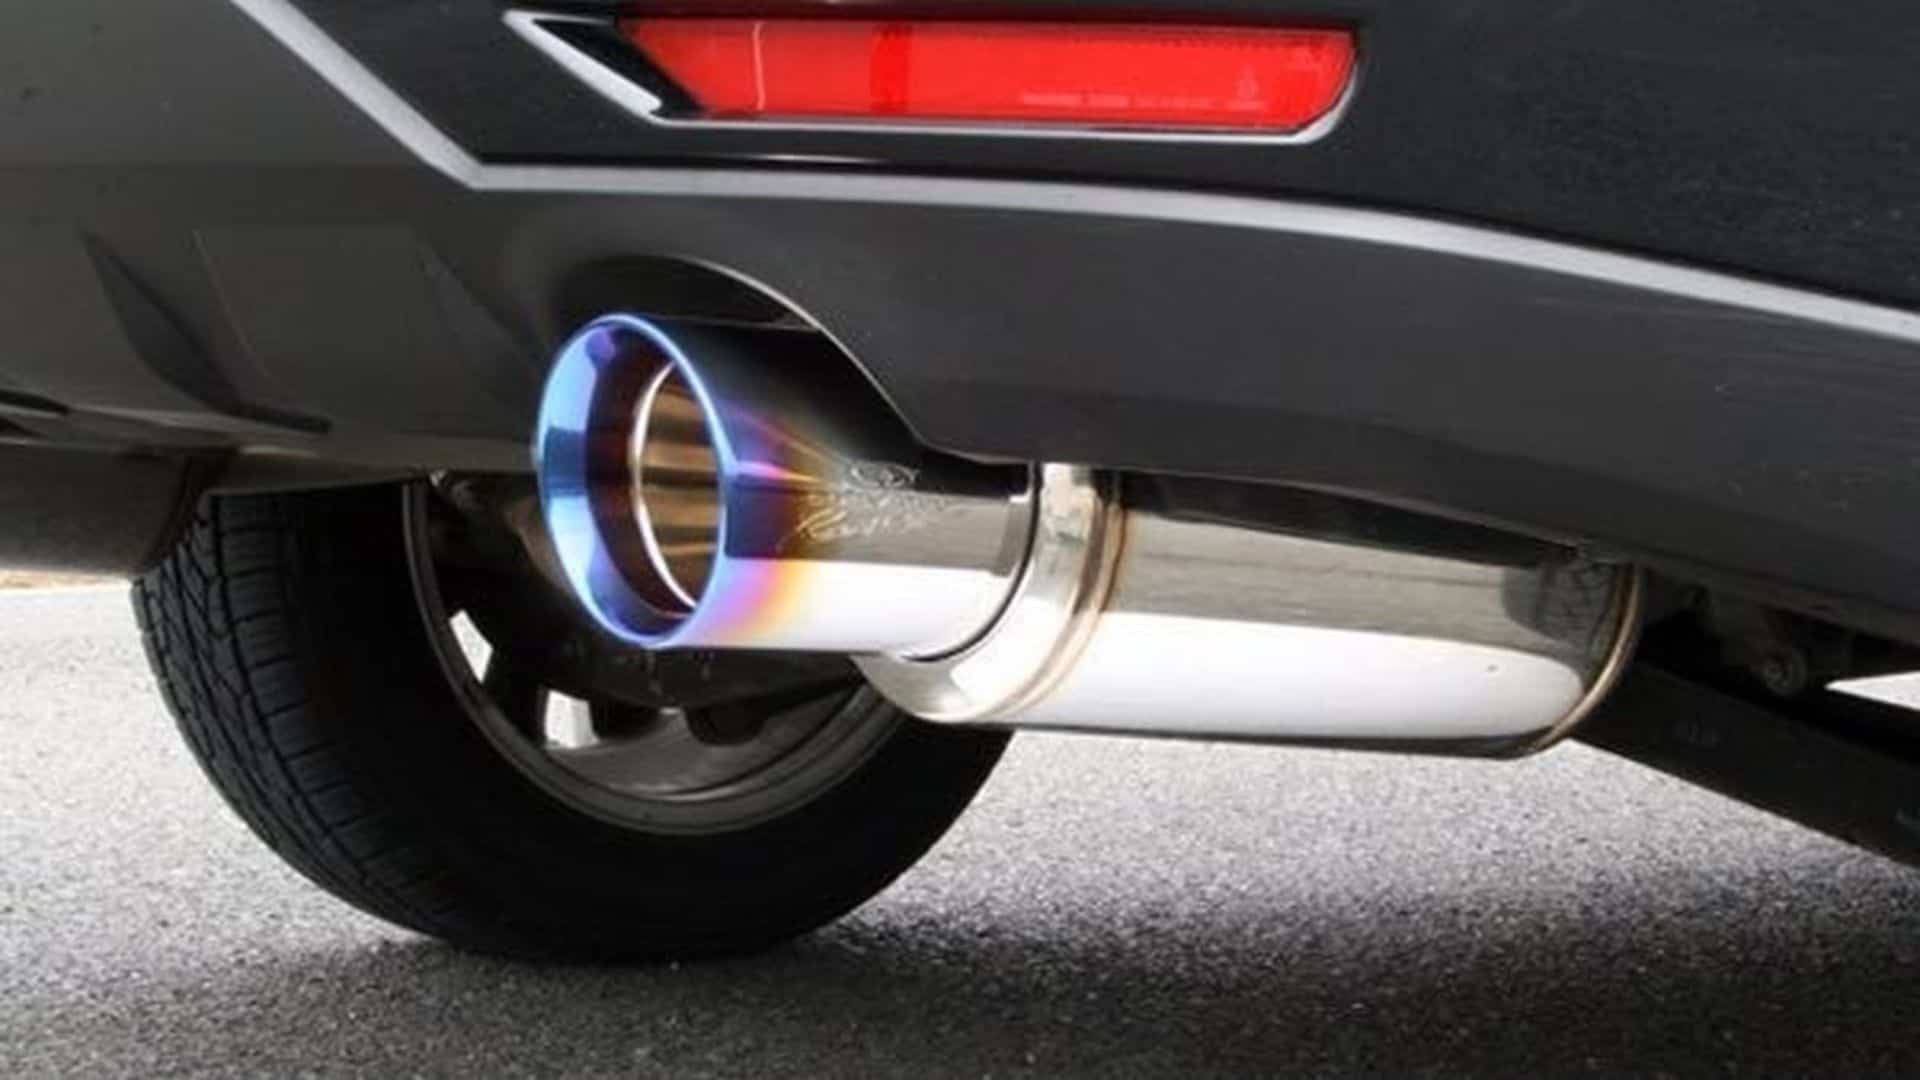 Transforming Your Car's Exhaust in Dubai